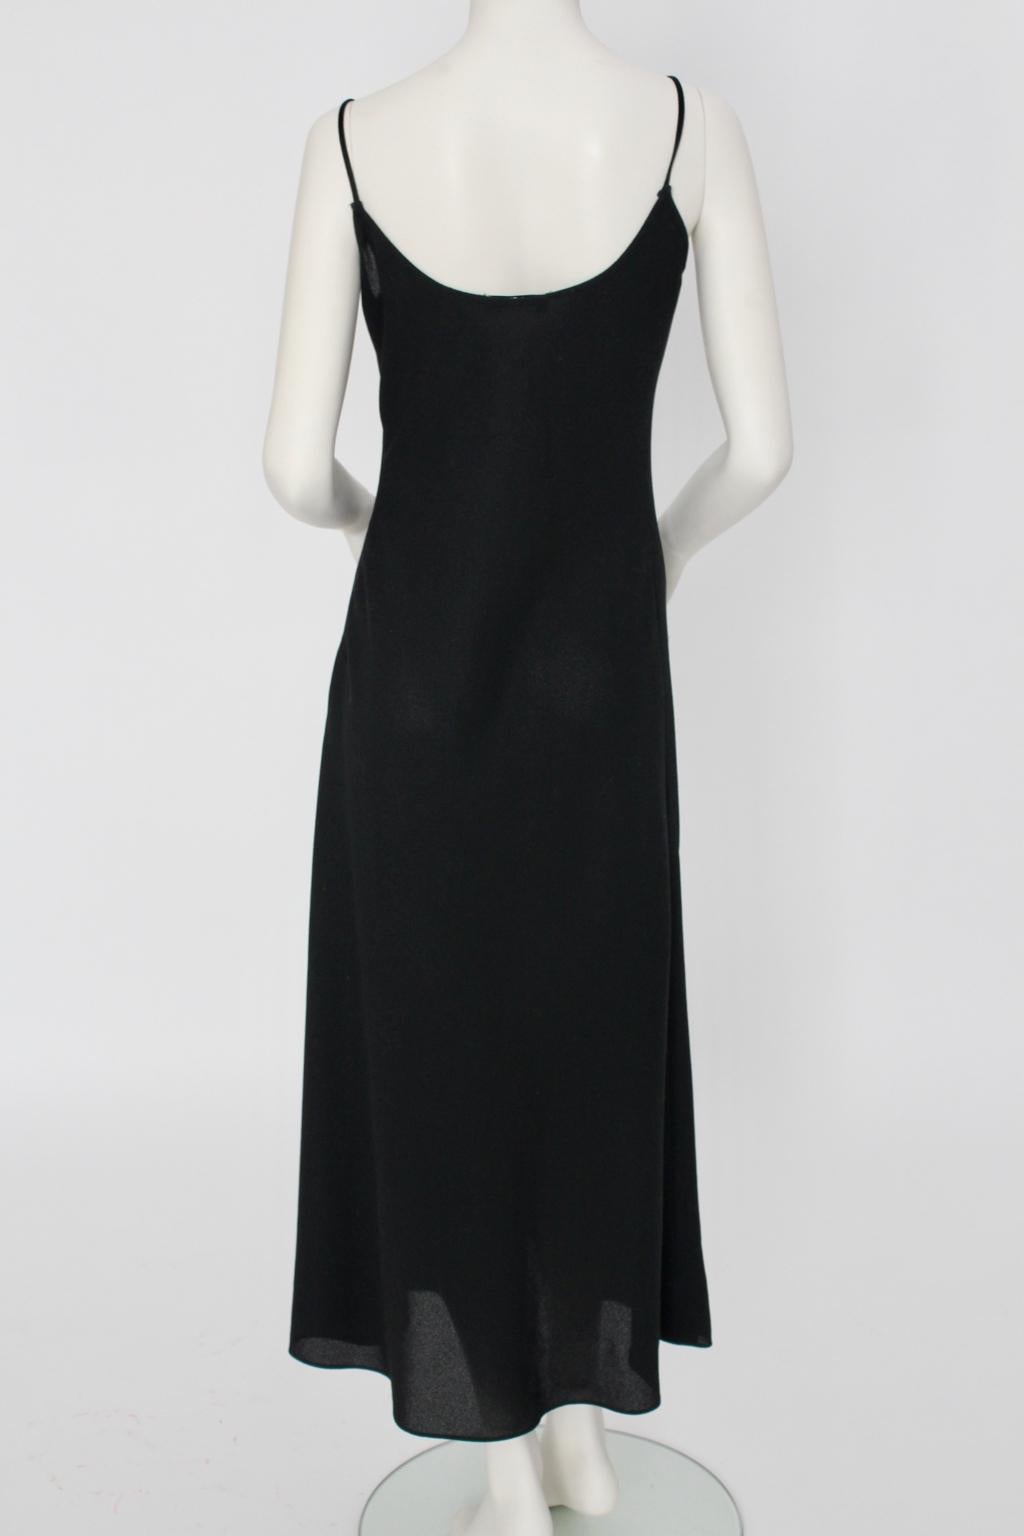 Sonia Rykiel Vintage Black Spaghetti Strap Dress  For Sale 2